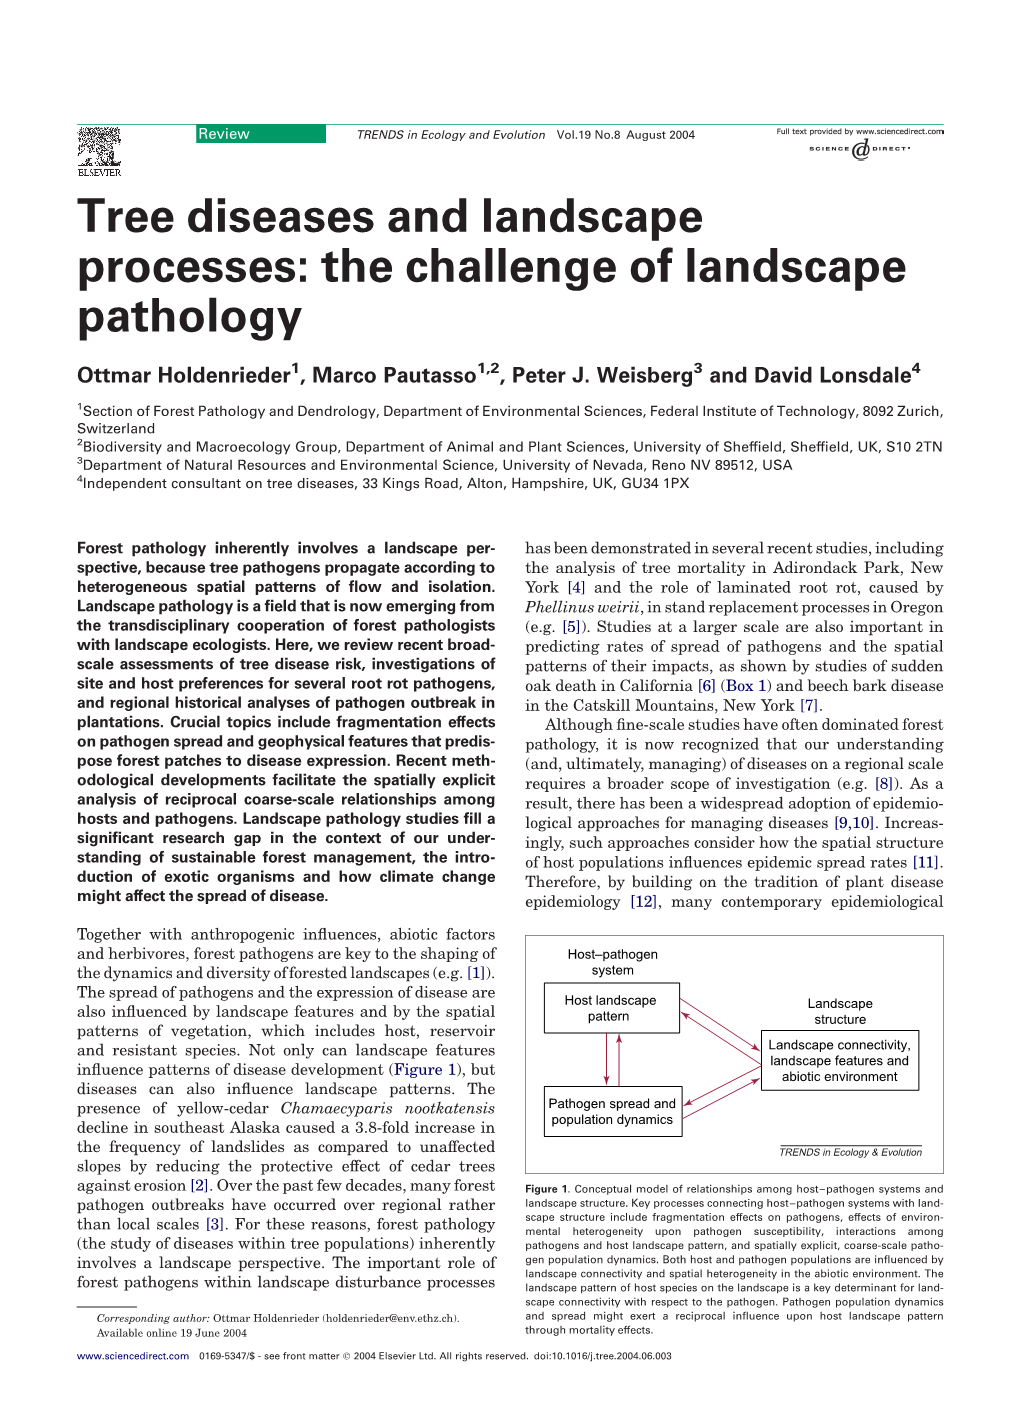 Tree Diseases and Landscape Processes: the Challenge of Landscape Pathology